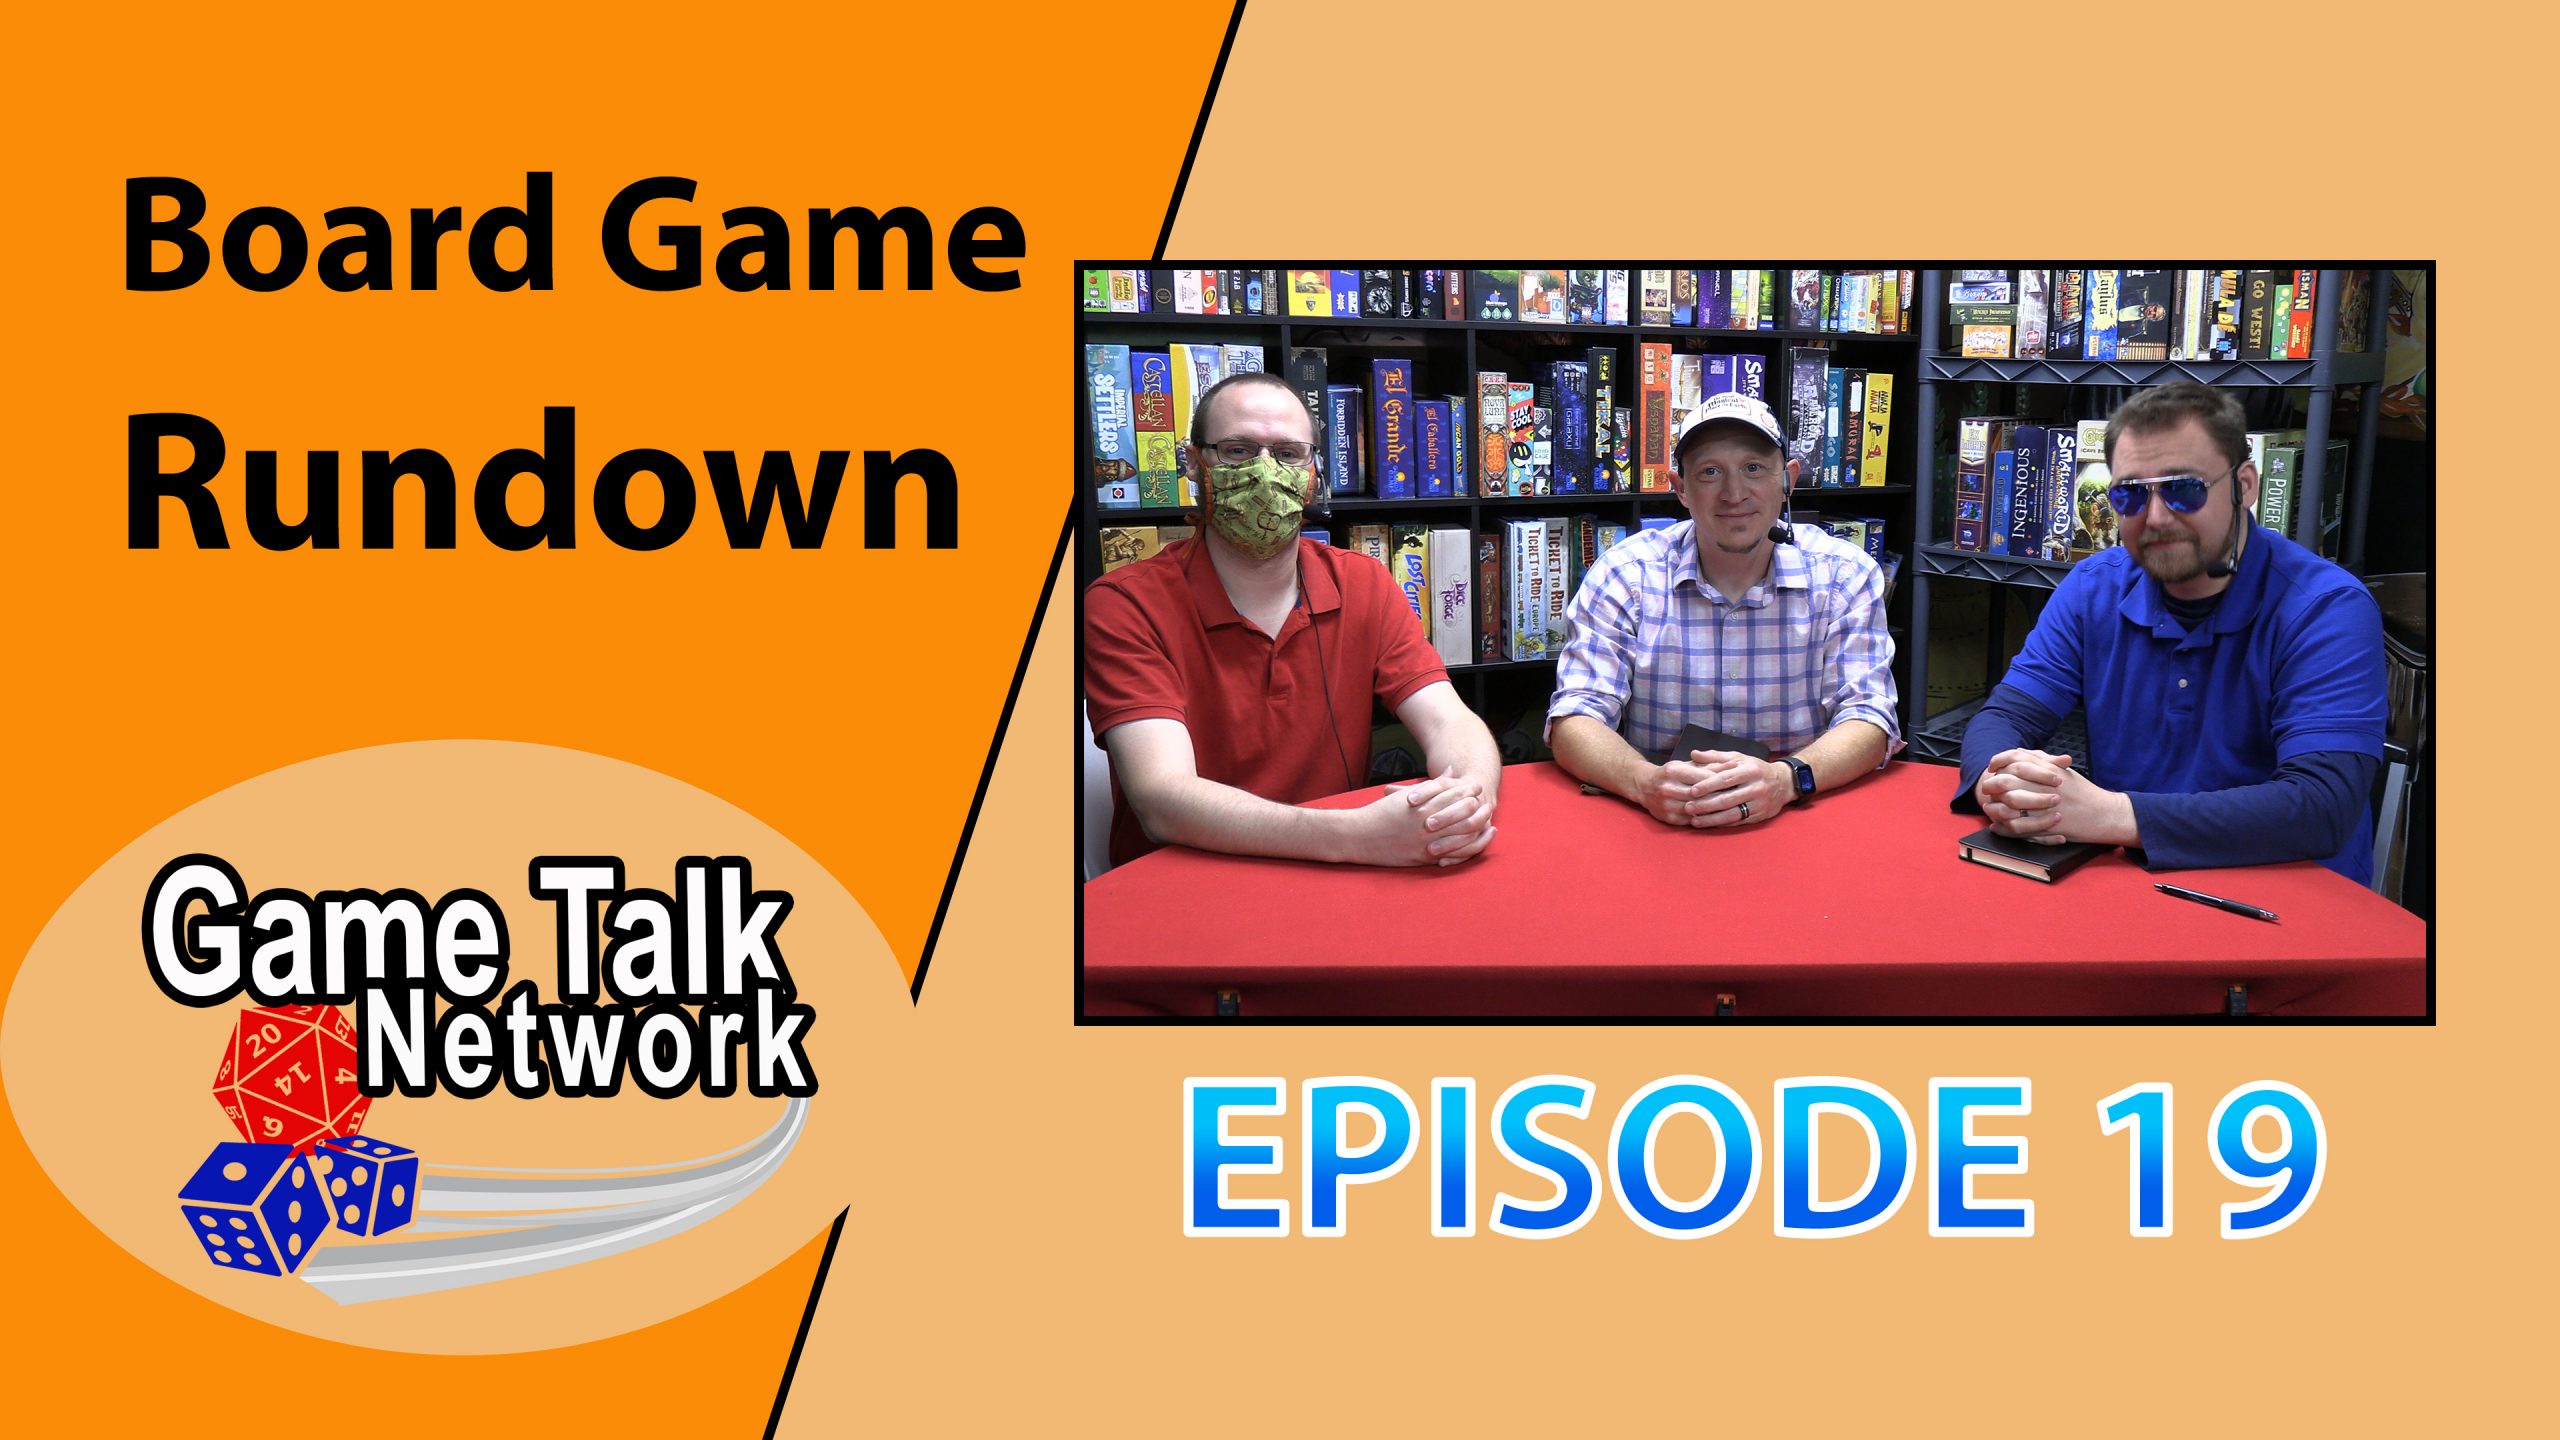 Board Game Rundown Episode 19: PSA on Scalping